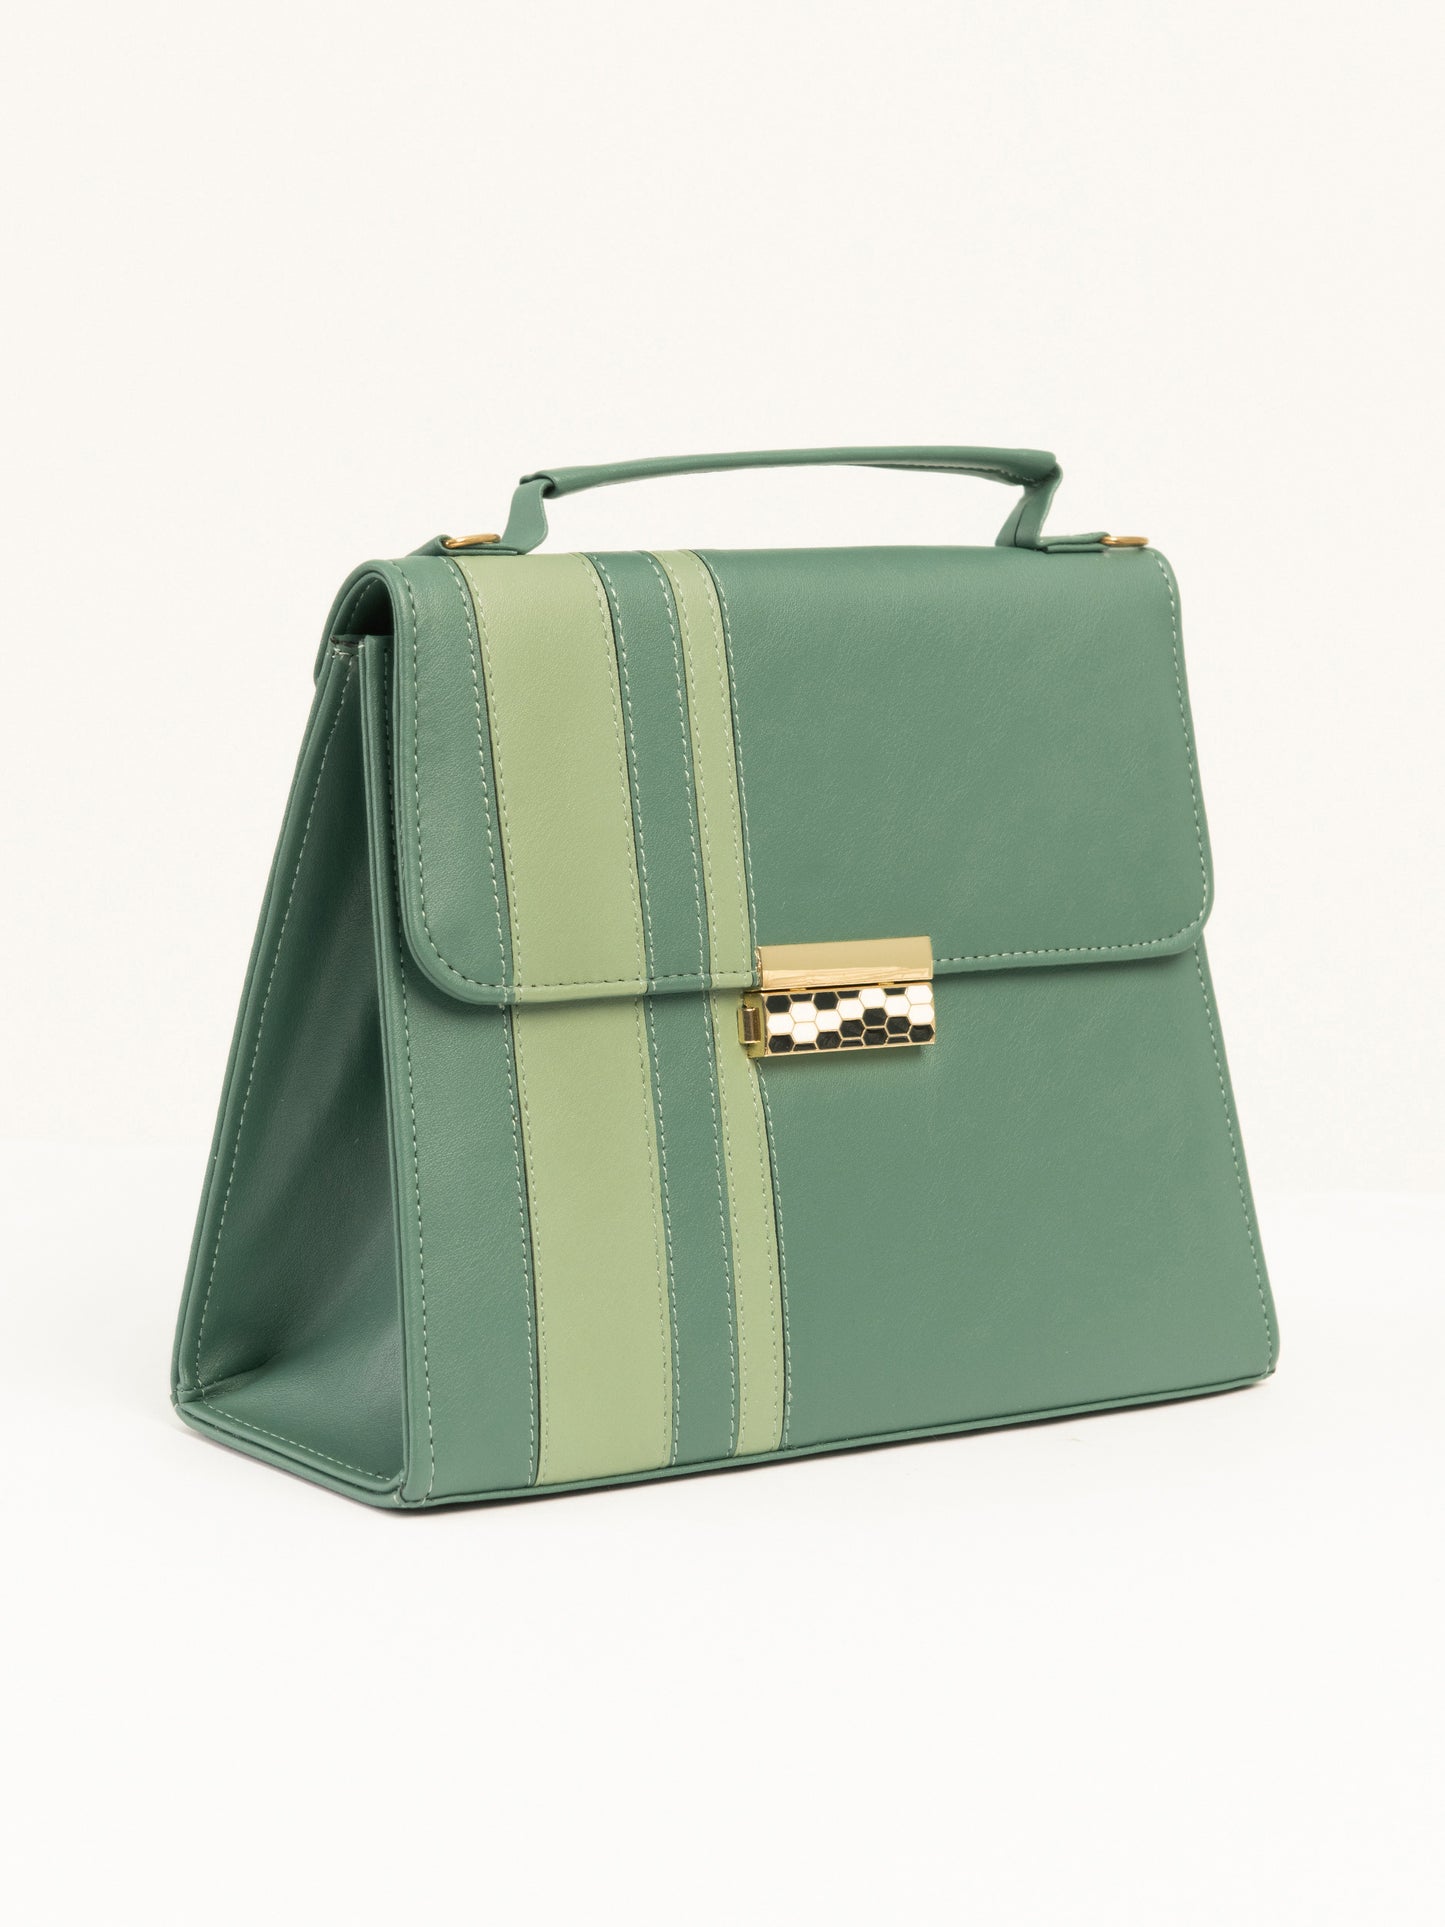 Honeycomb Box Style Handbag